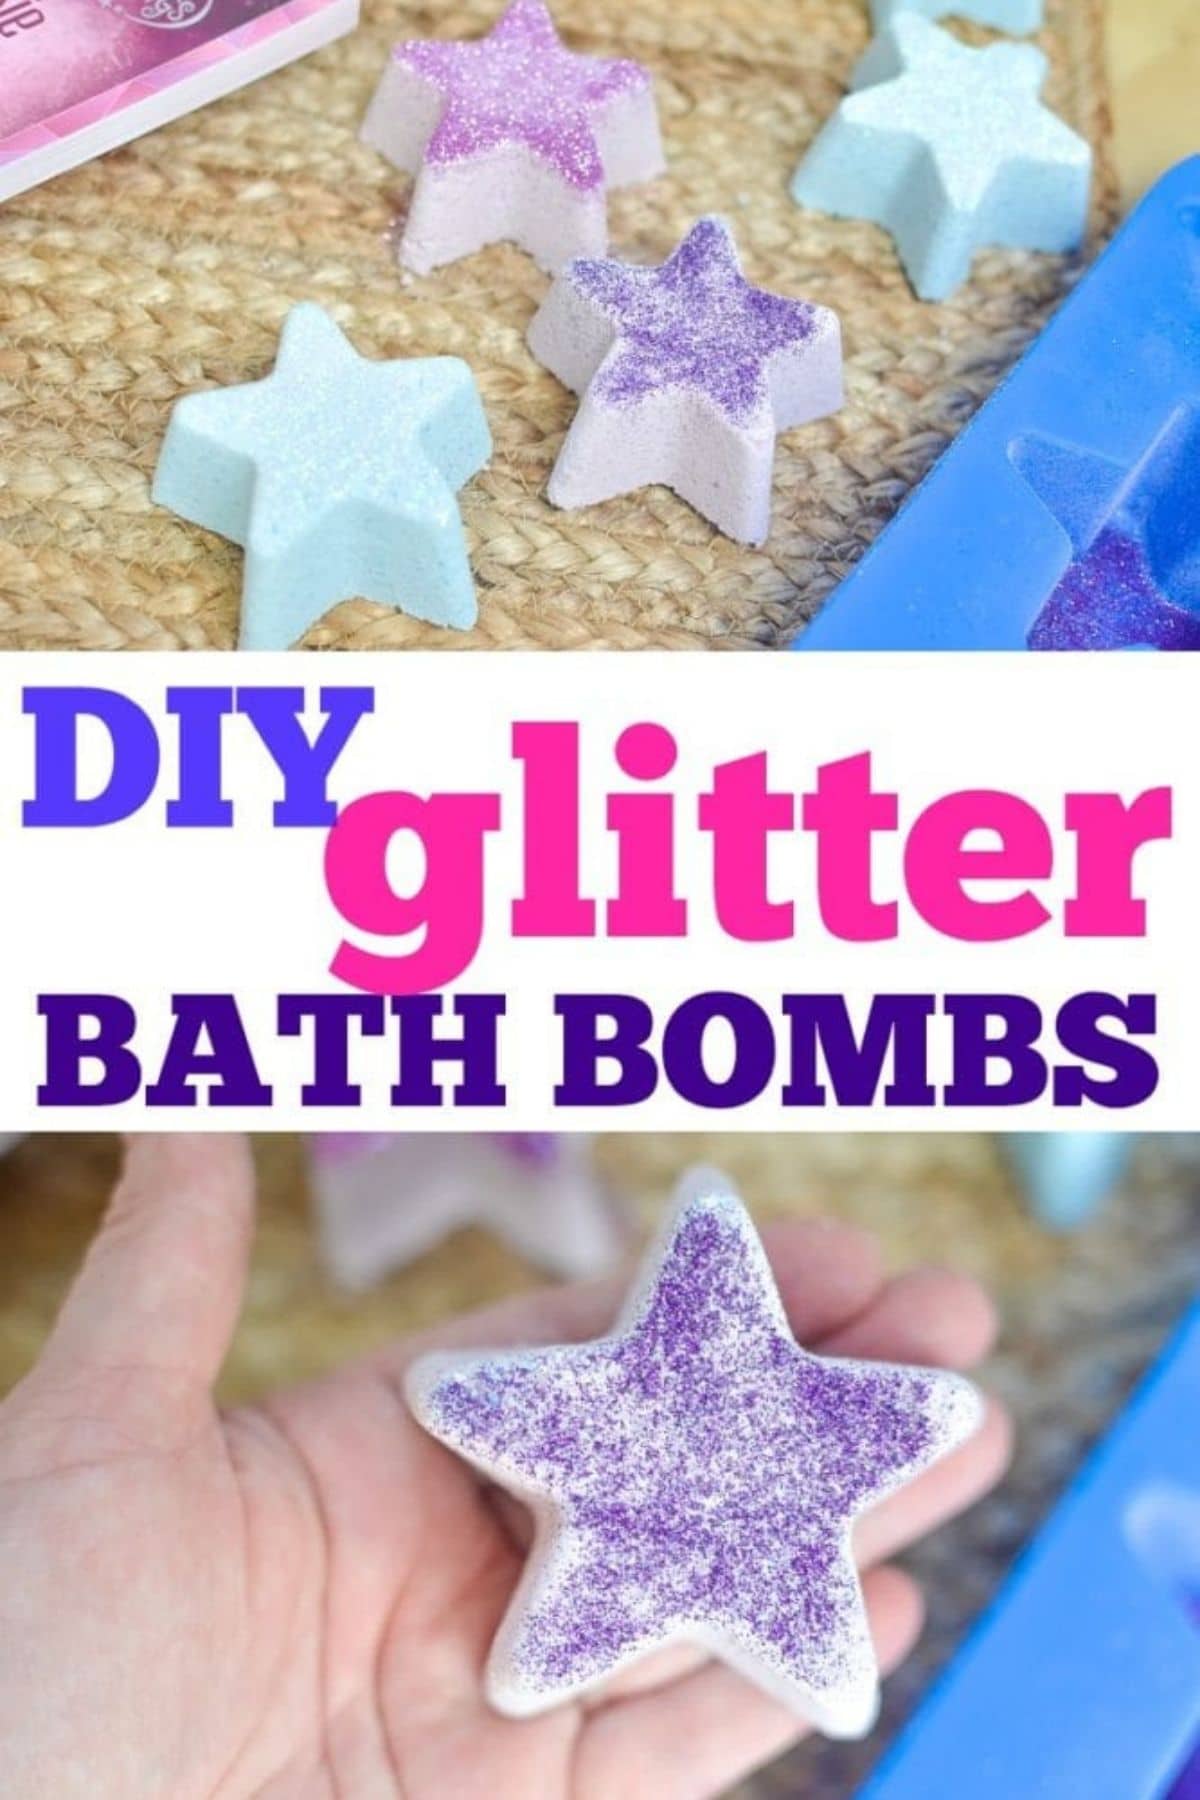 Glitter bath bombs